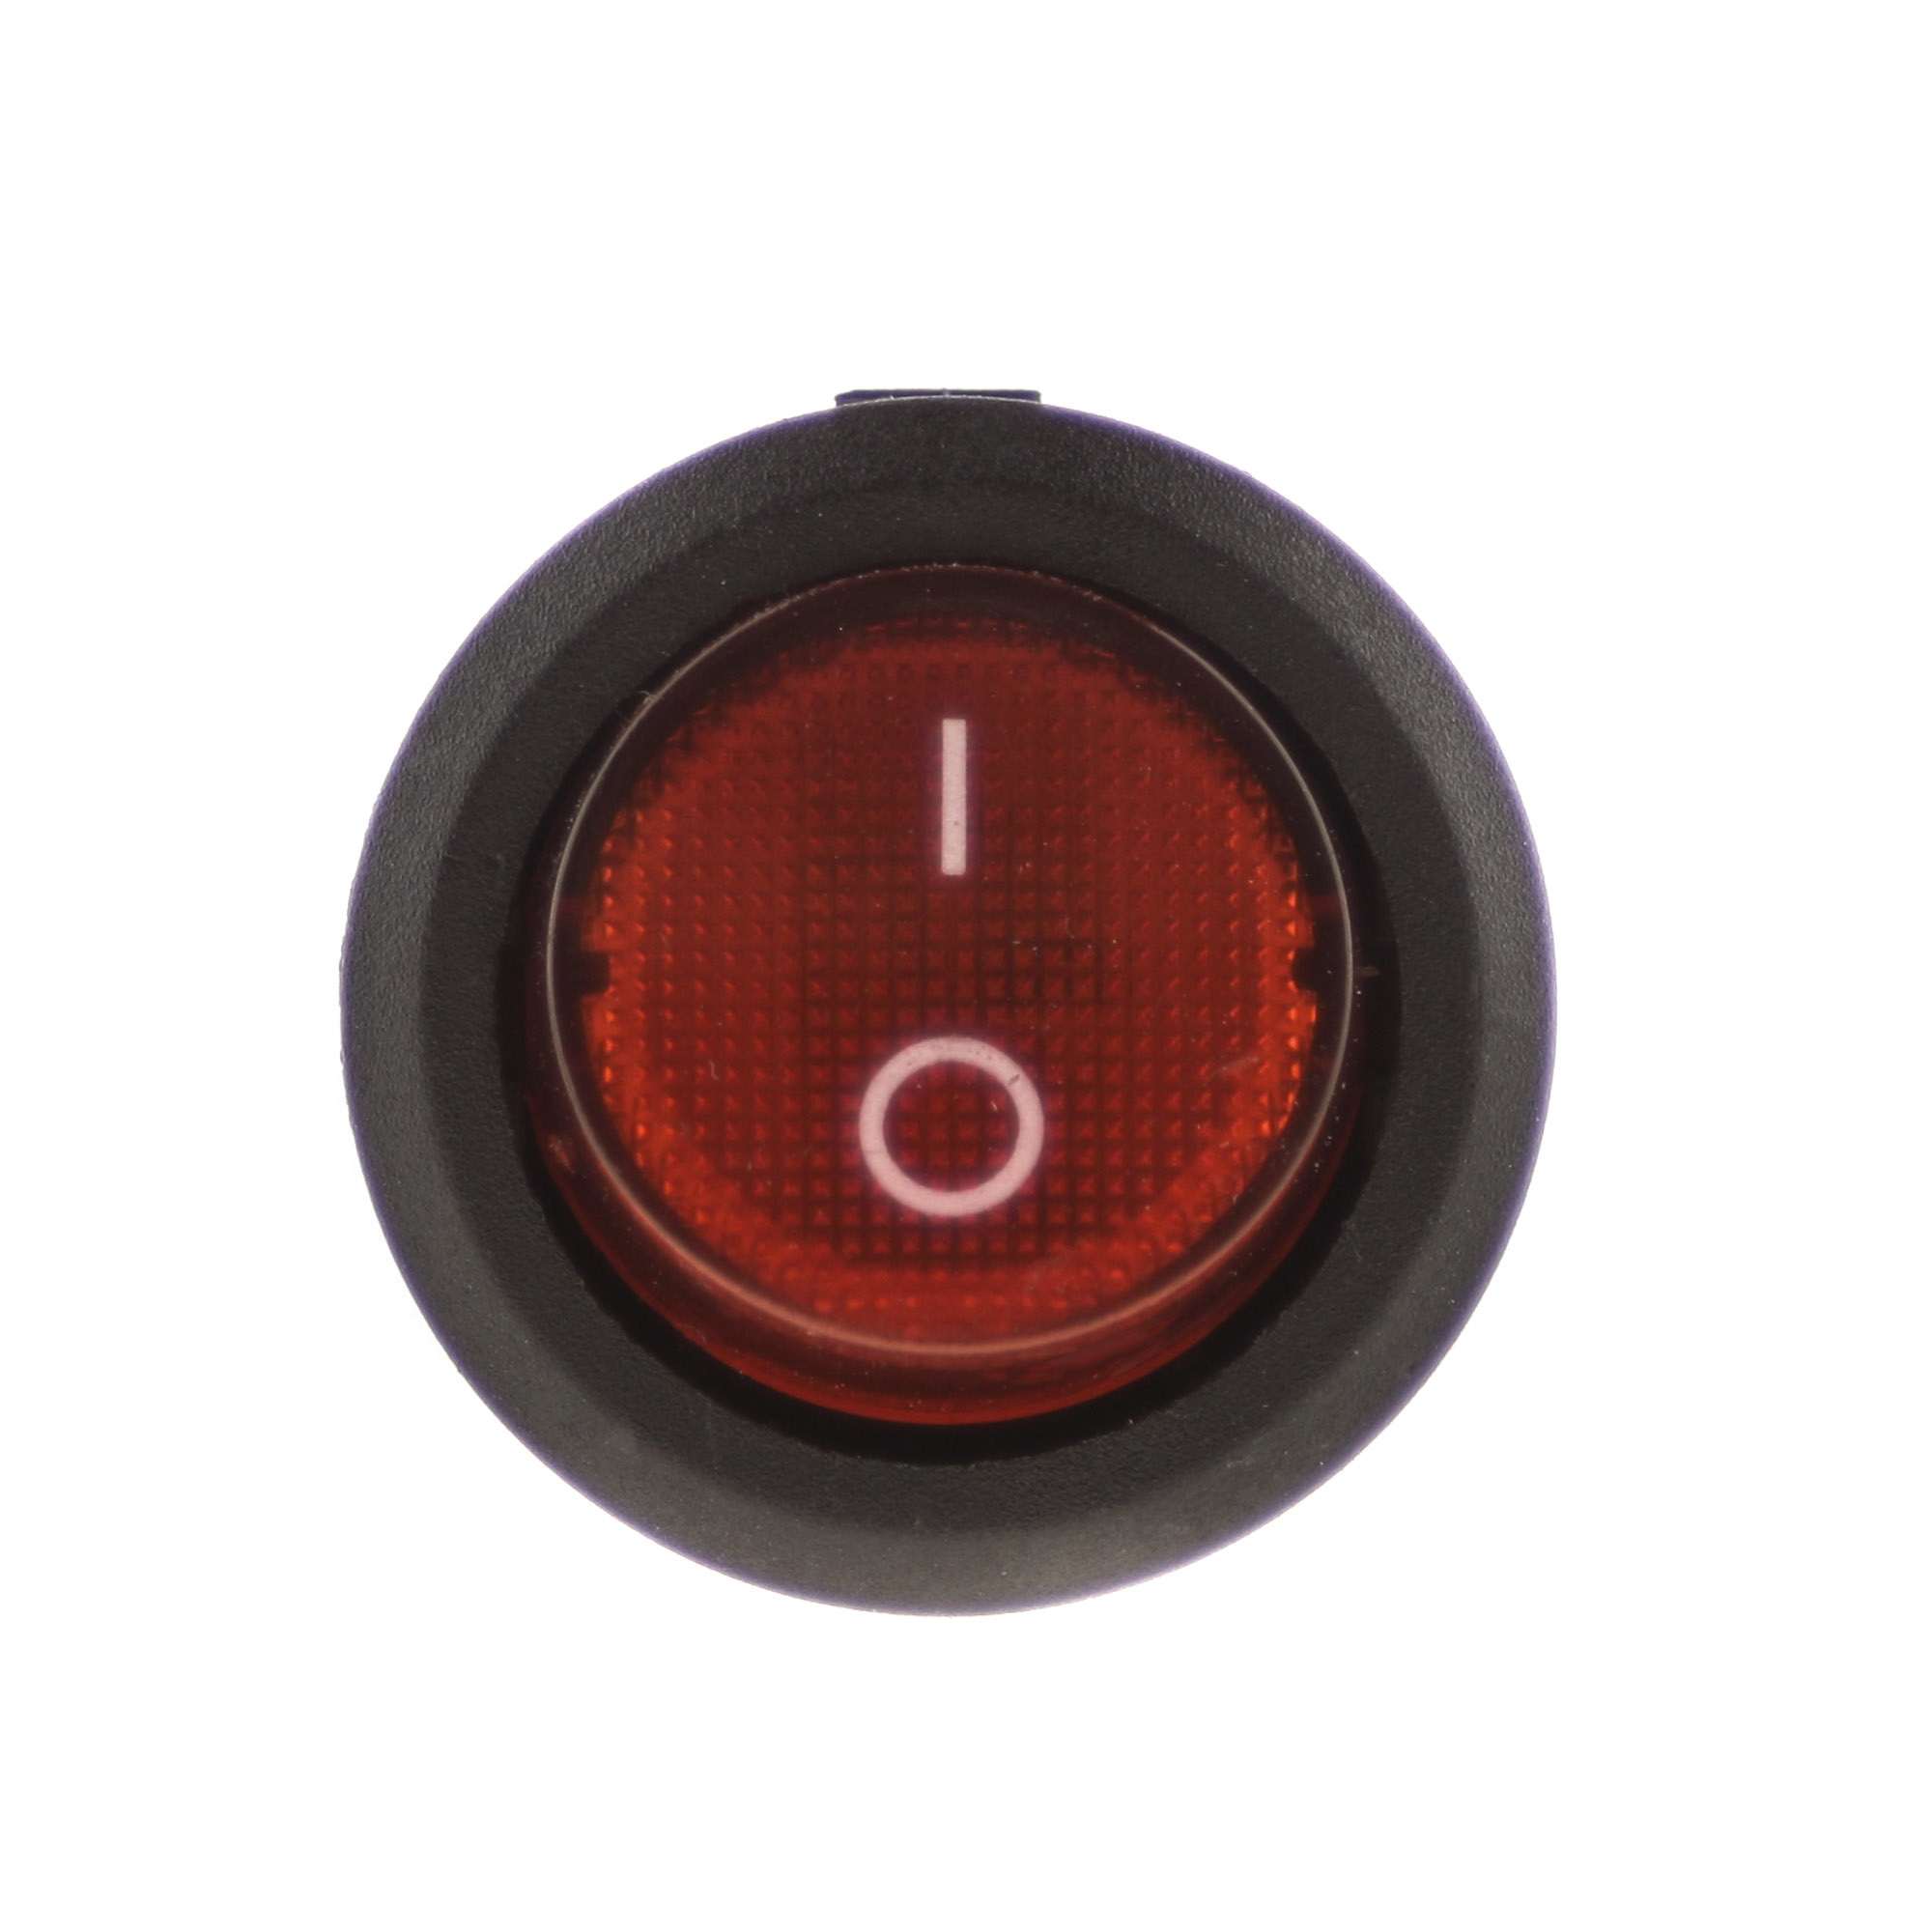 Switch I-0 250V 6A, 23mm, round, red